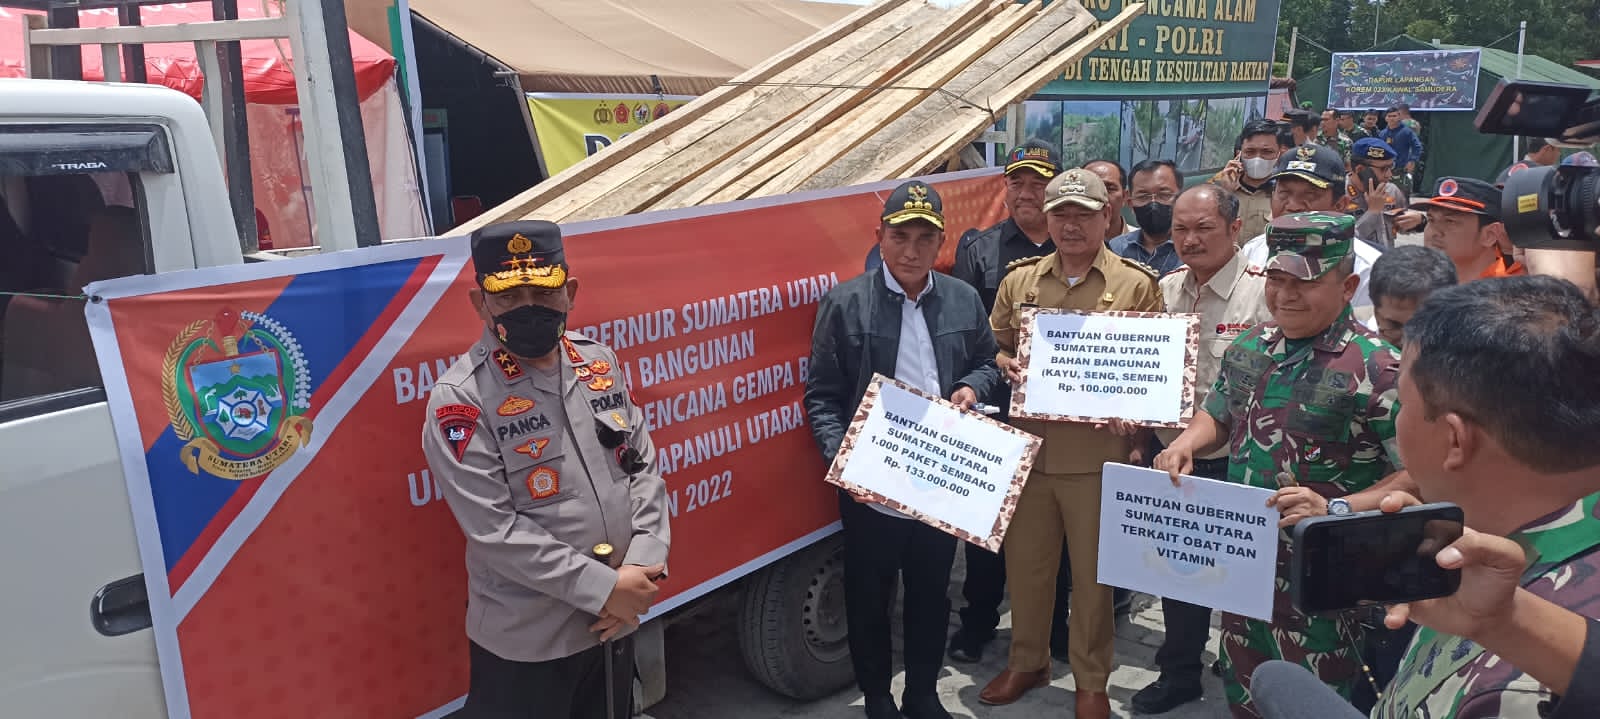 Bupati Tapanuli Utara Bersama Gubernur Sumatera Utara Tinjau Korban Bencana Gempa